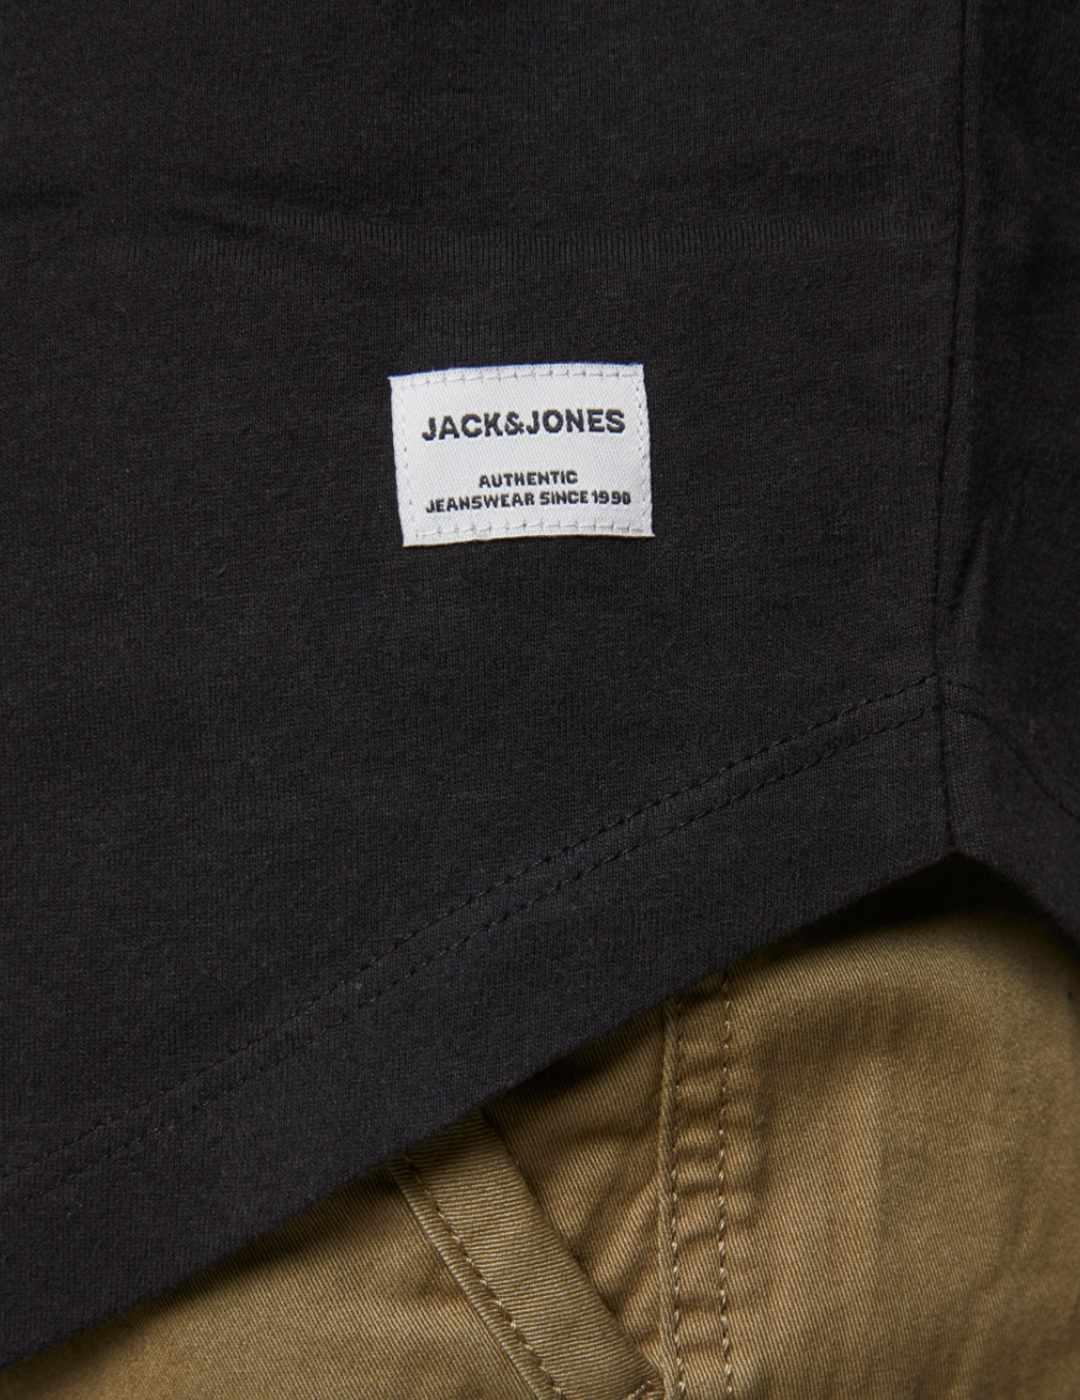 Camiseta Jack/df01Jones Enoa negra manga corta para hombre